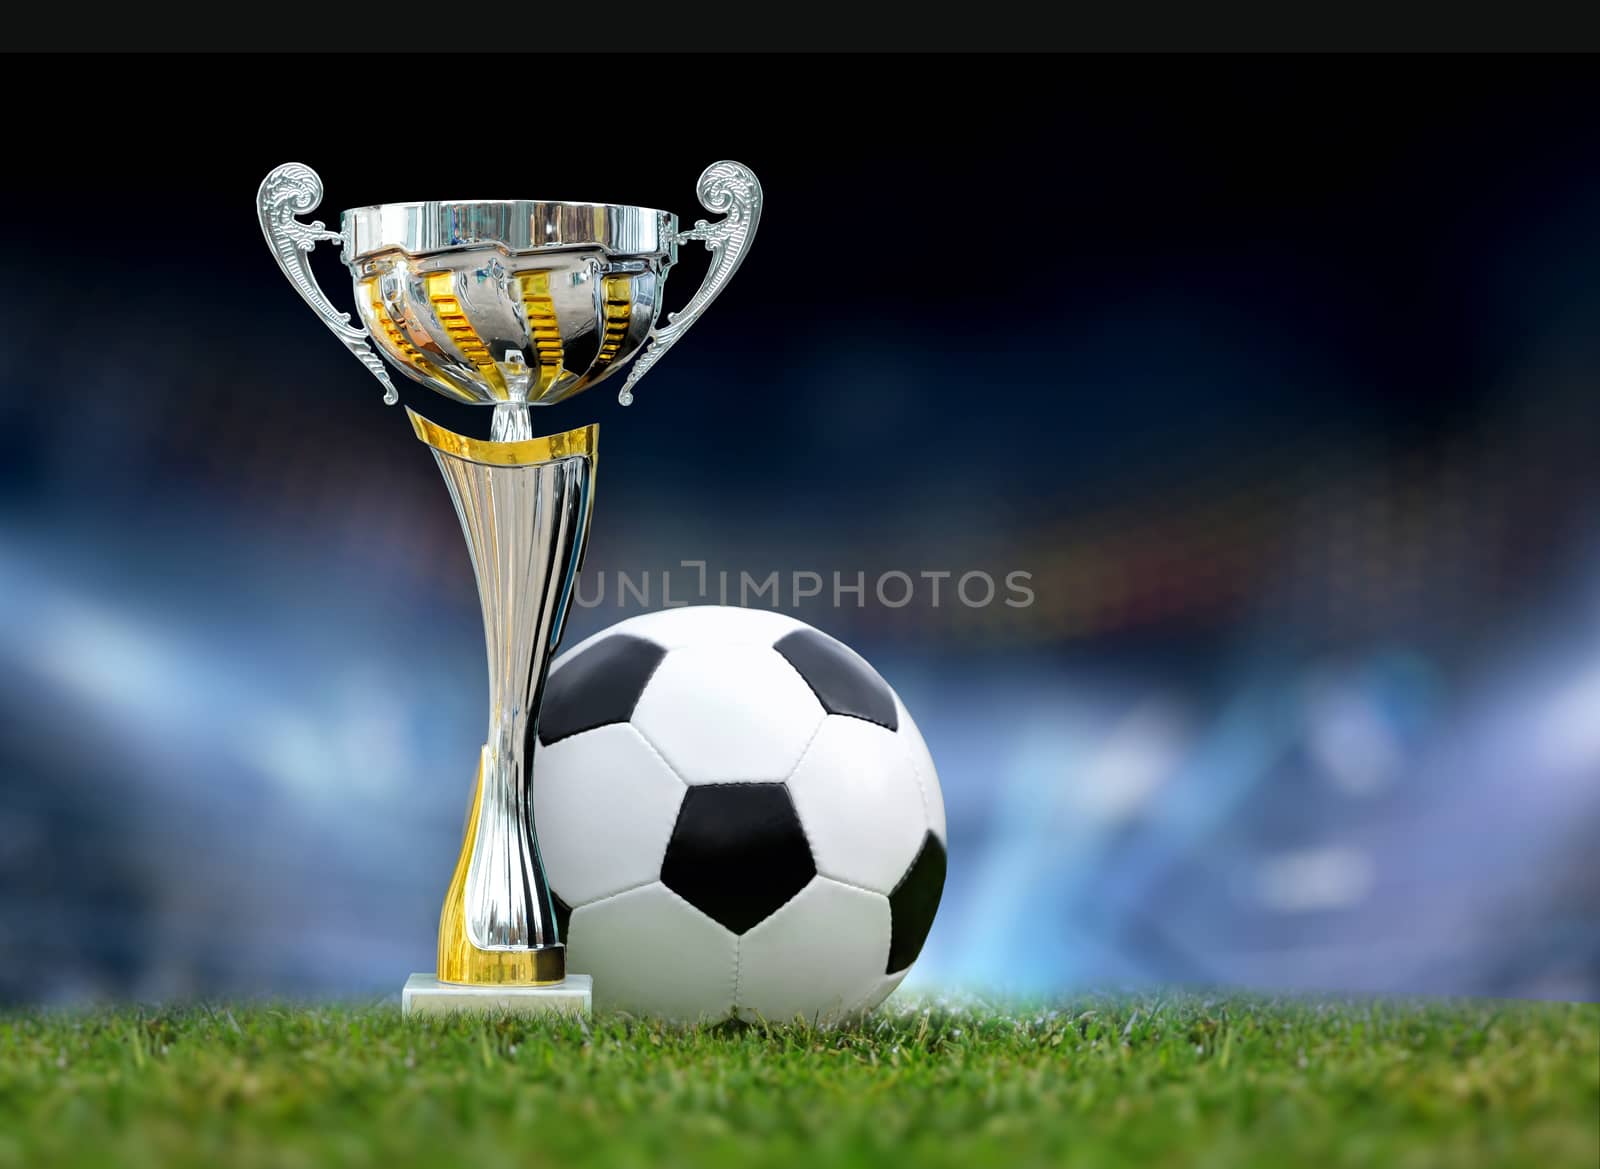 Golden trophy in grass on soccer field background